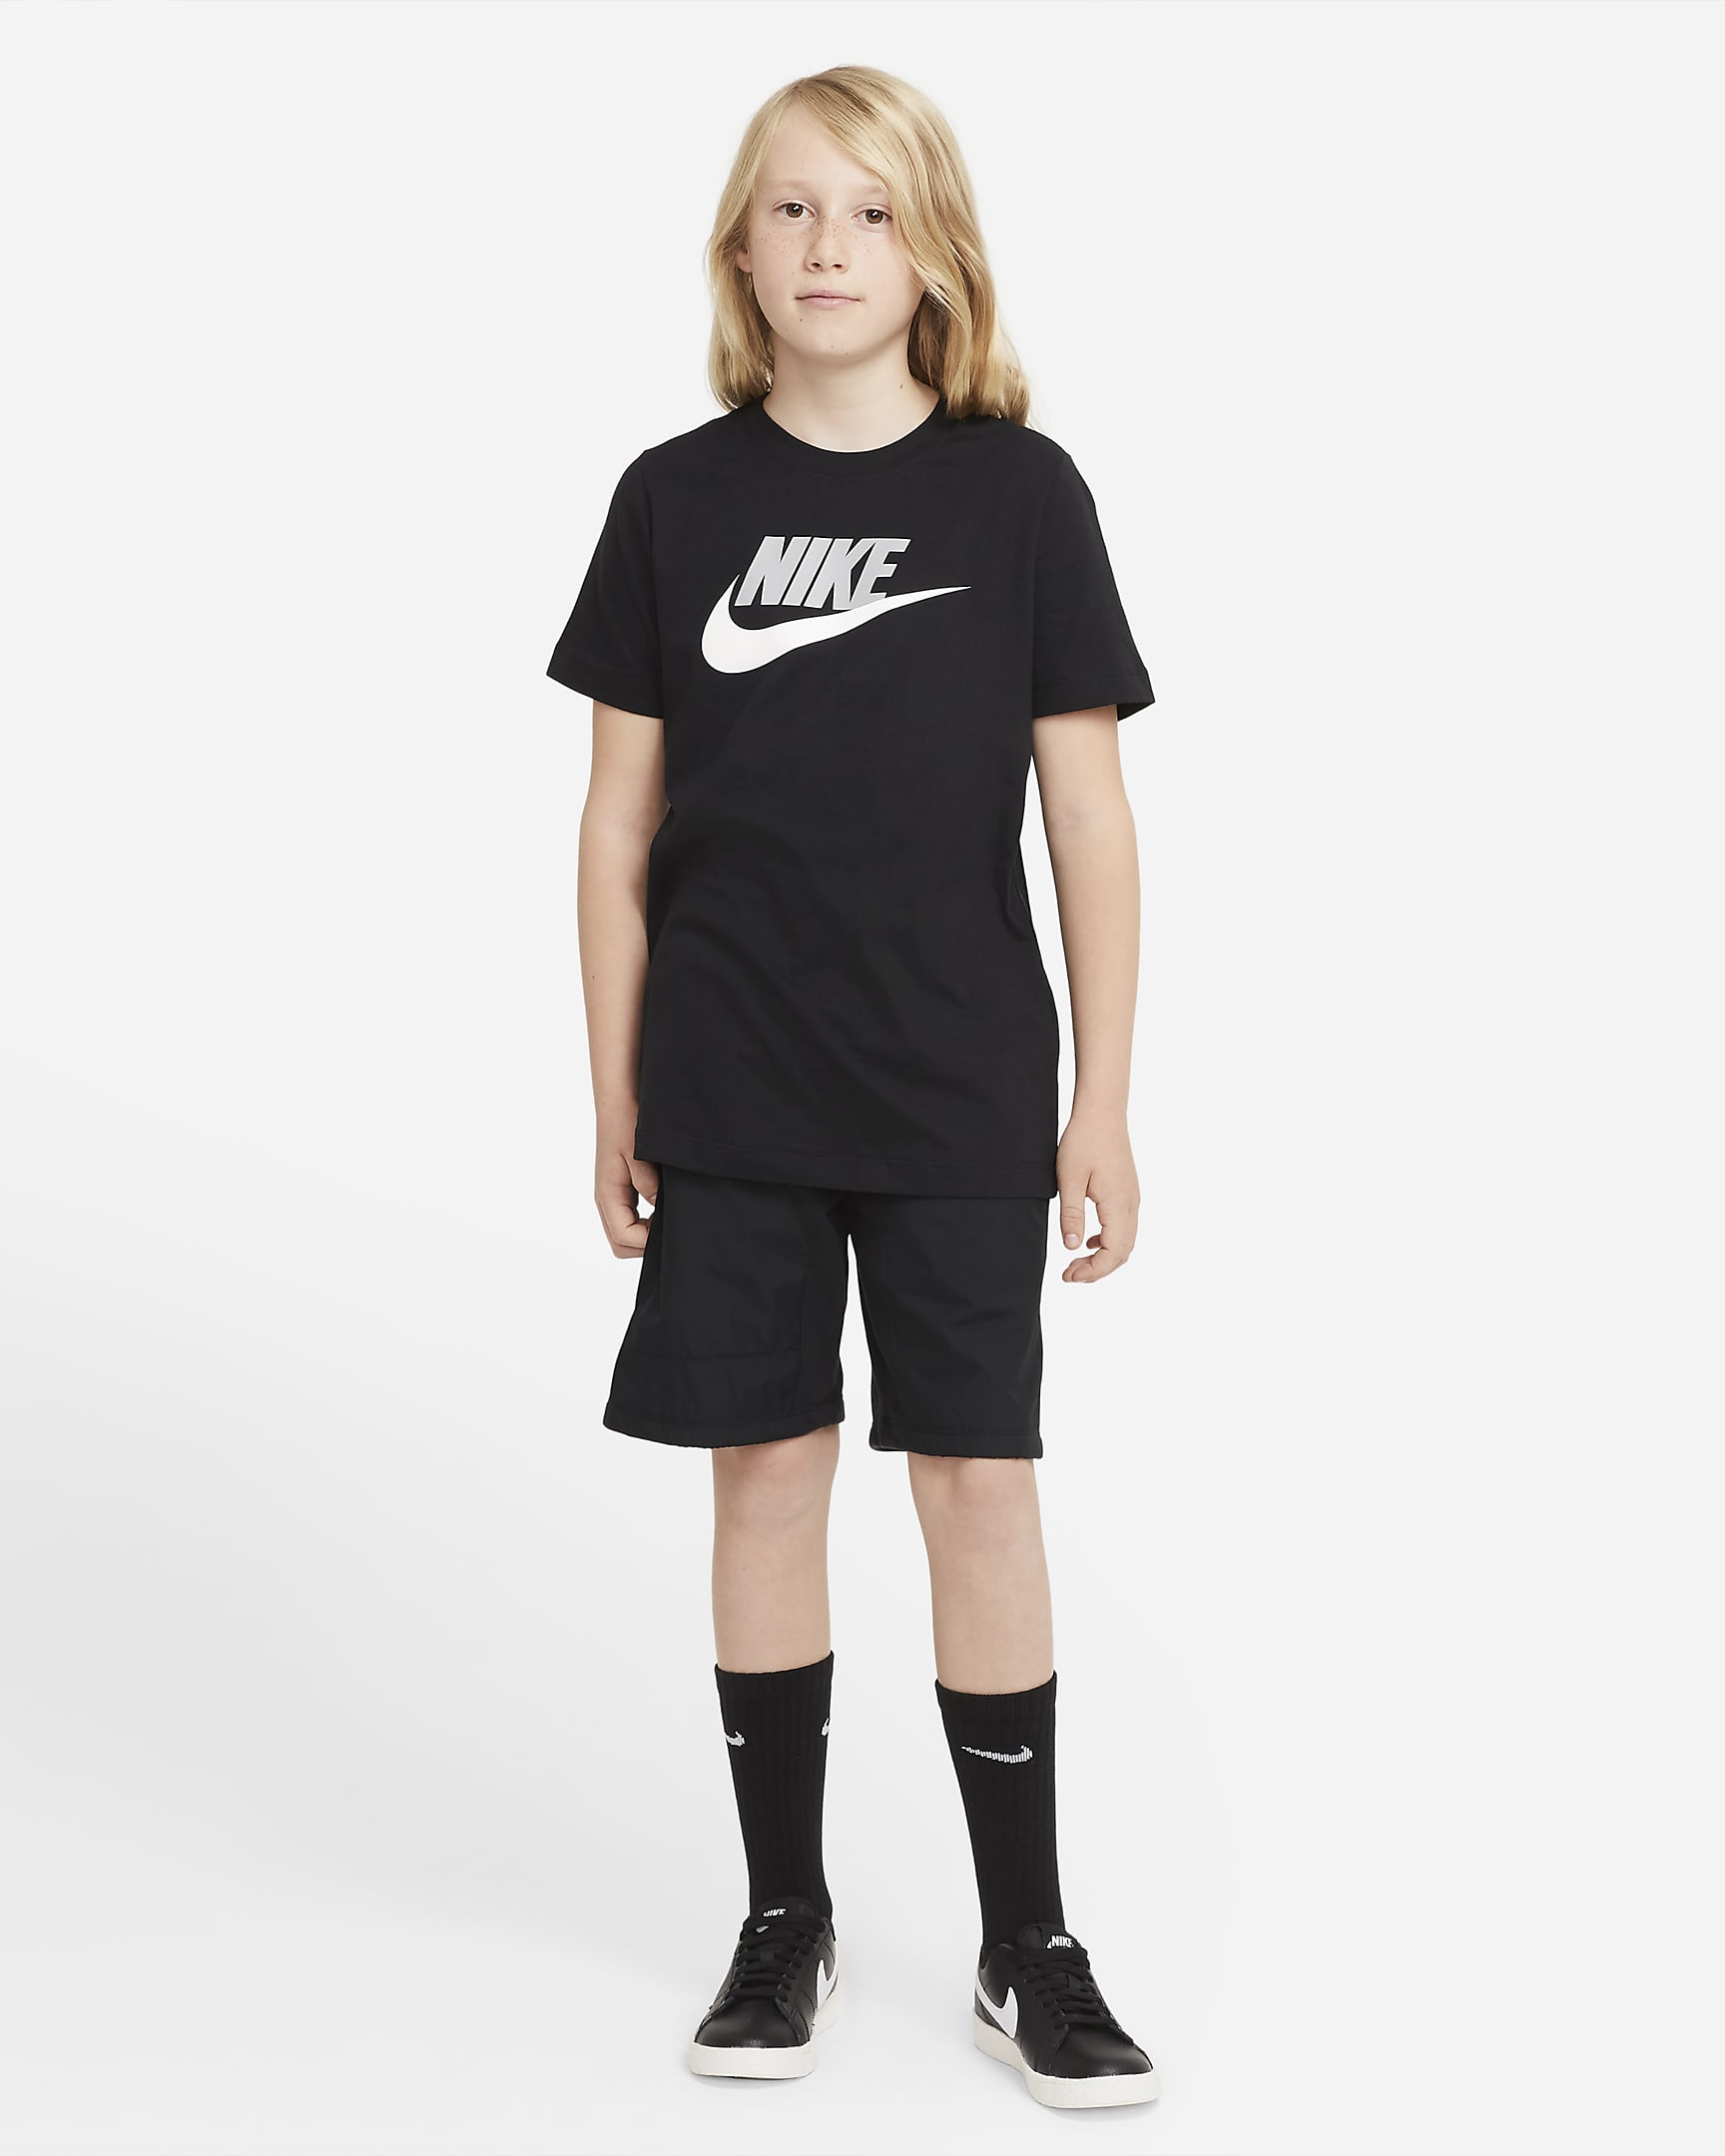 Nike Sportswear Older Kids' Cotton T-Shirt - Black/Light Smoke Grey/Light Smoke Grey